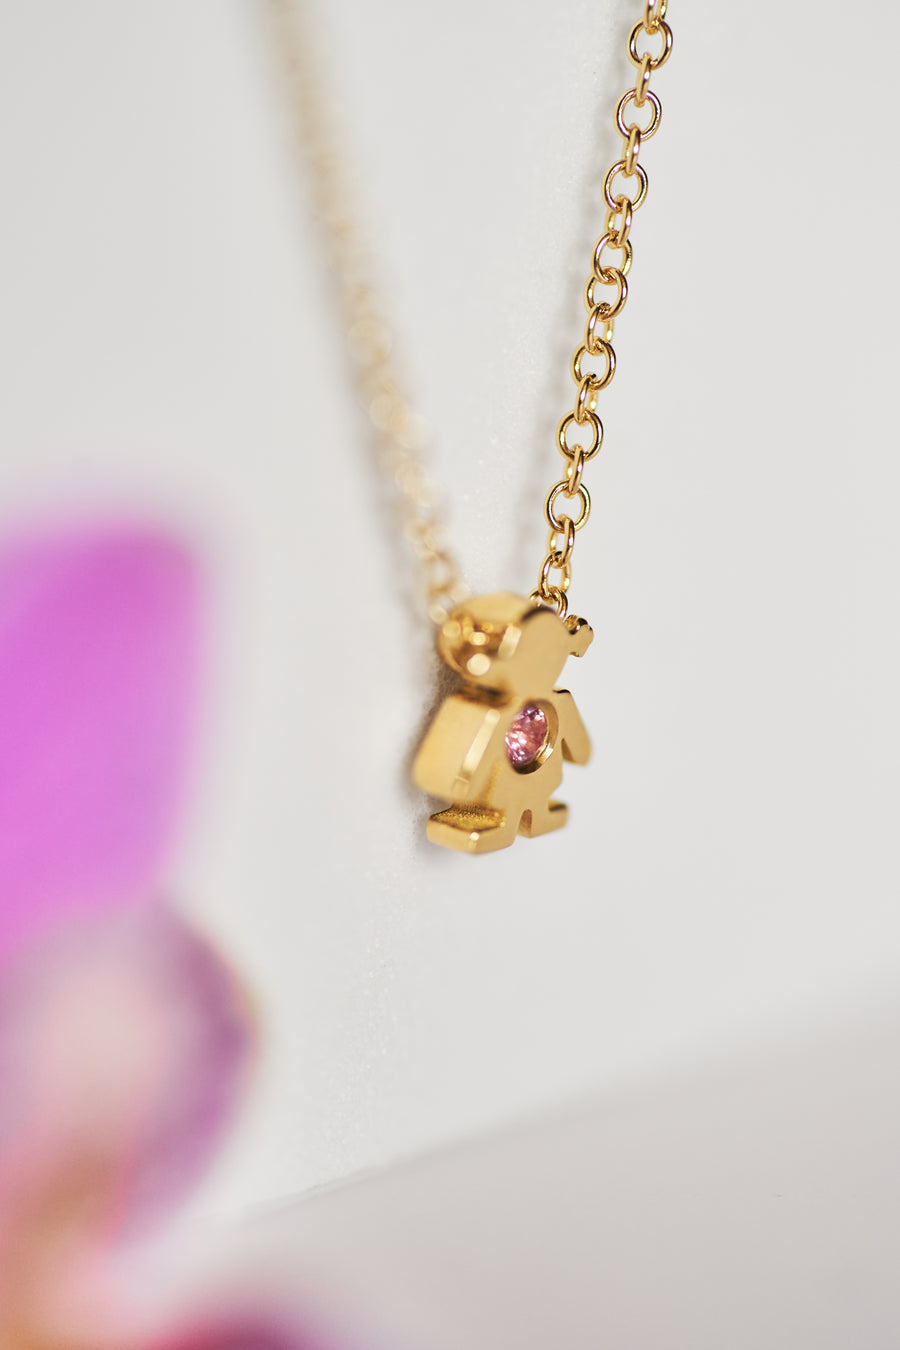 18k gold girl pendant necklace.